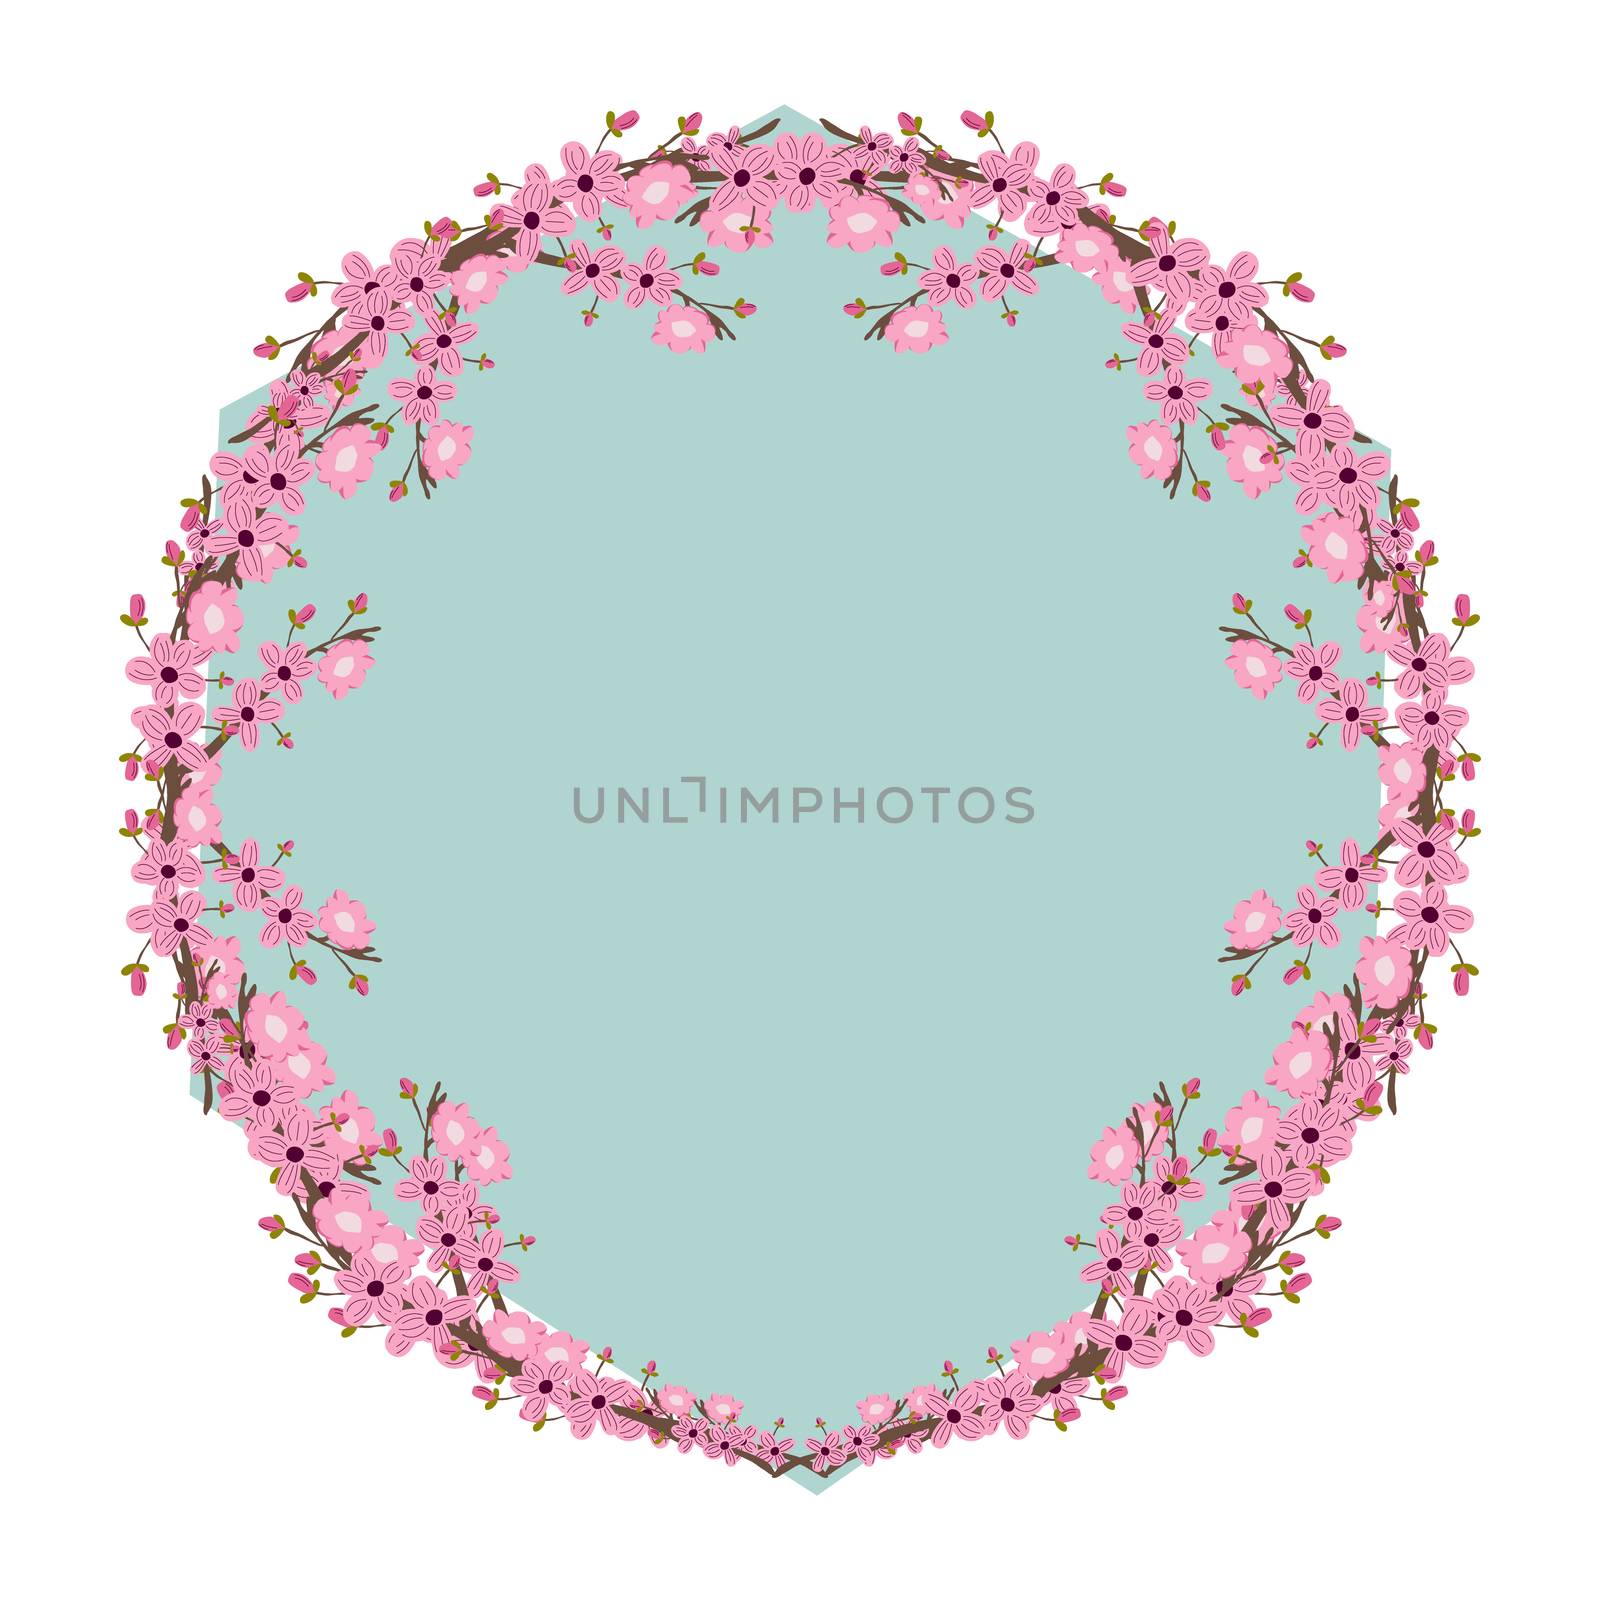 Round frame with pink cherry blossom flowers. by Nata_Prando